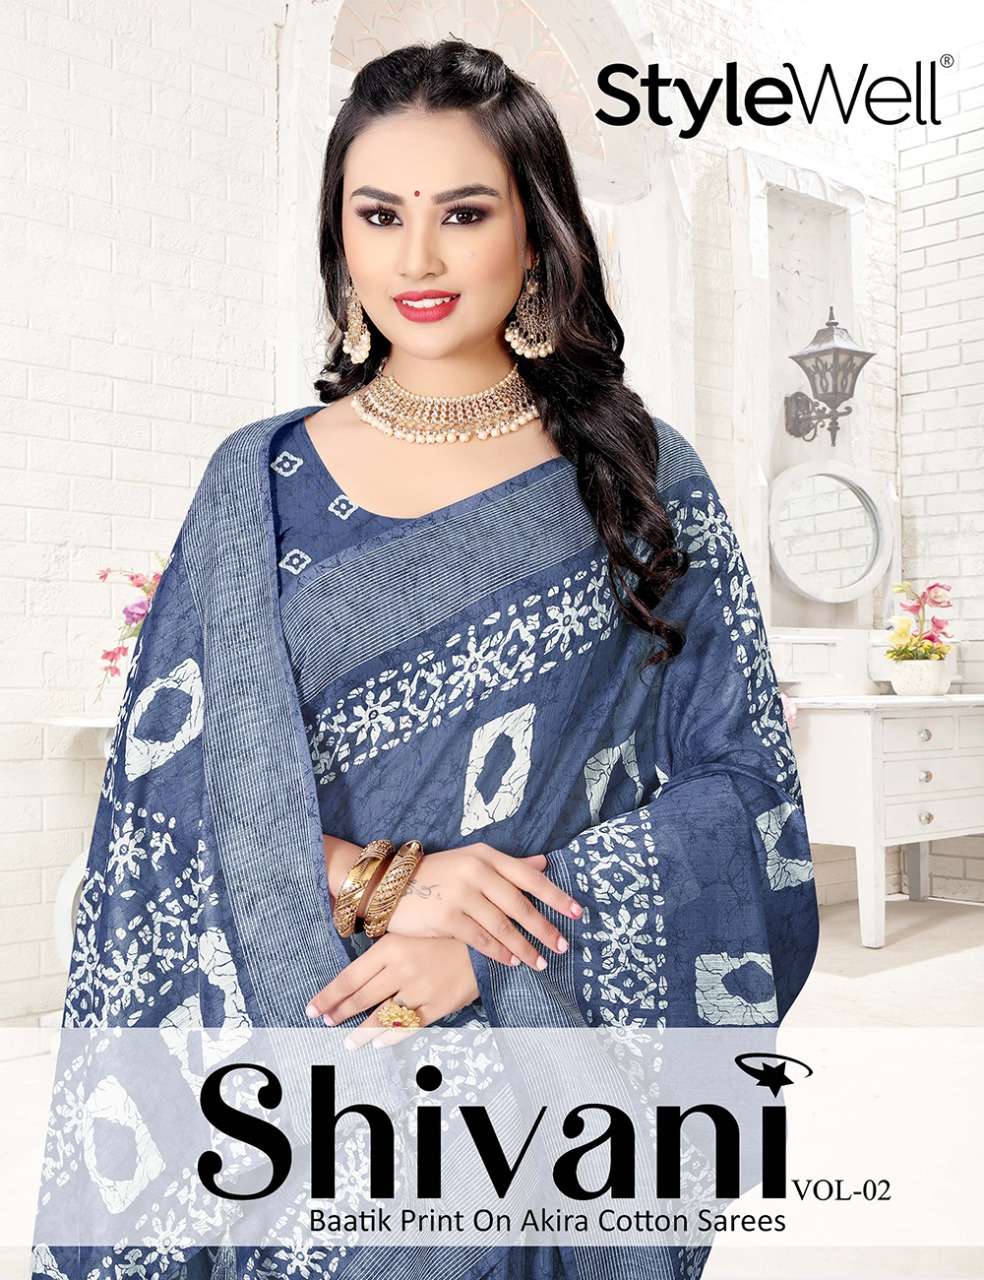 stylewell shivani vol 2 cotton batik printed sarees